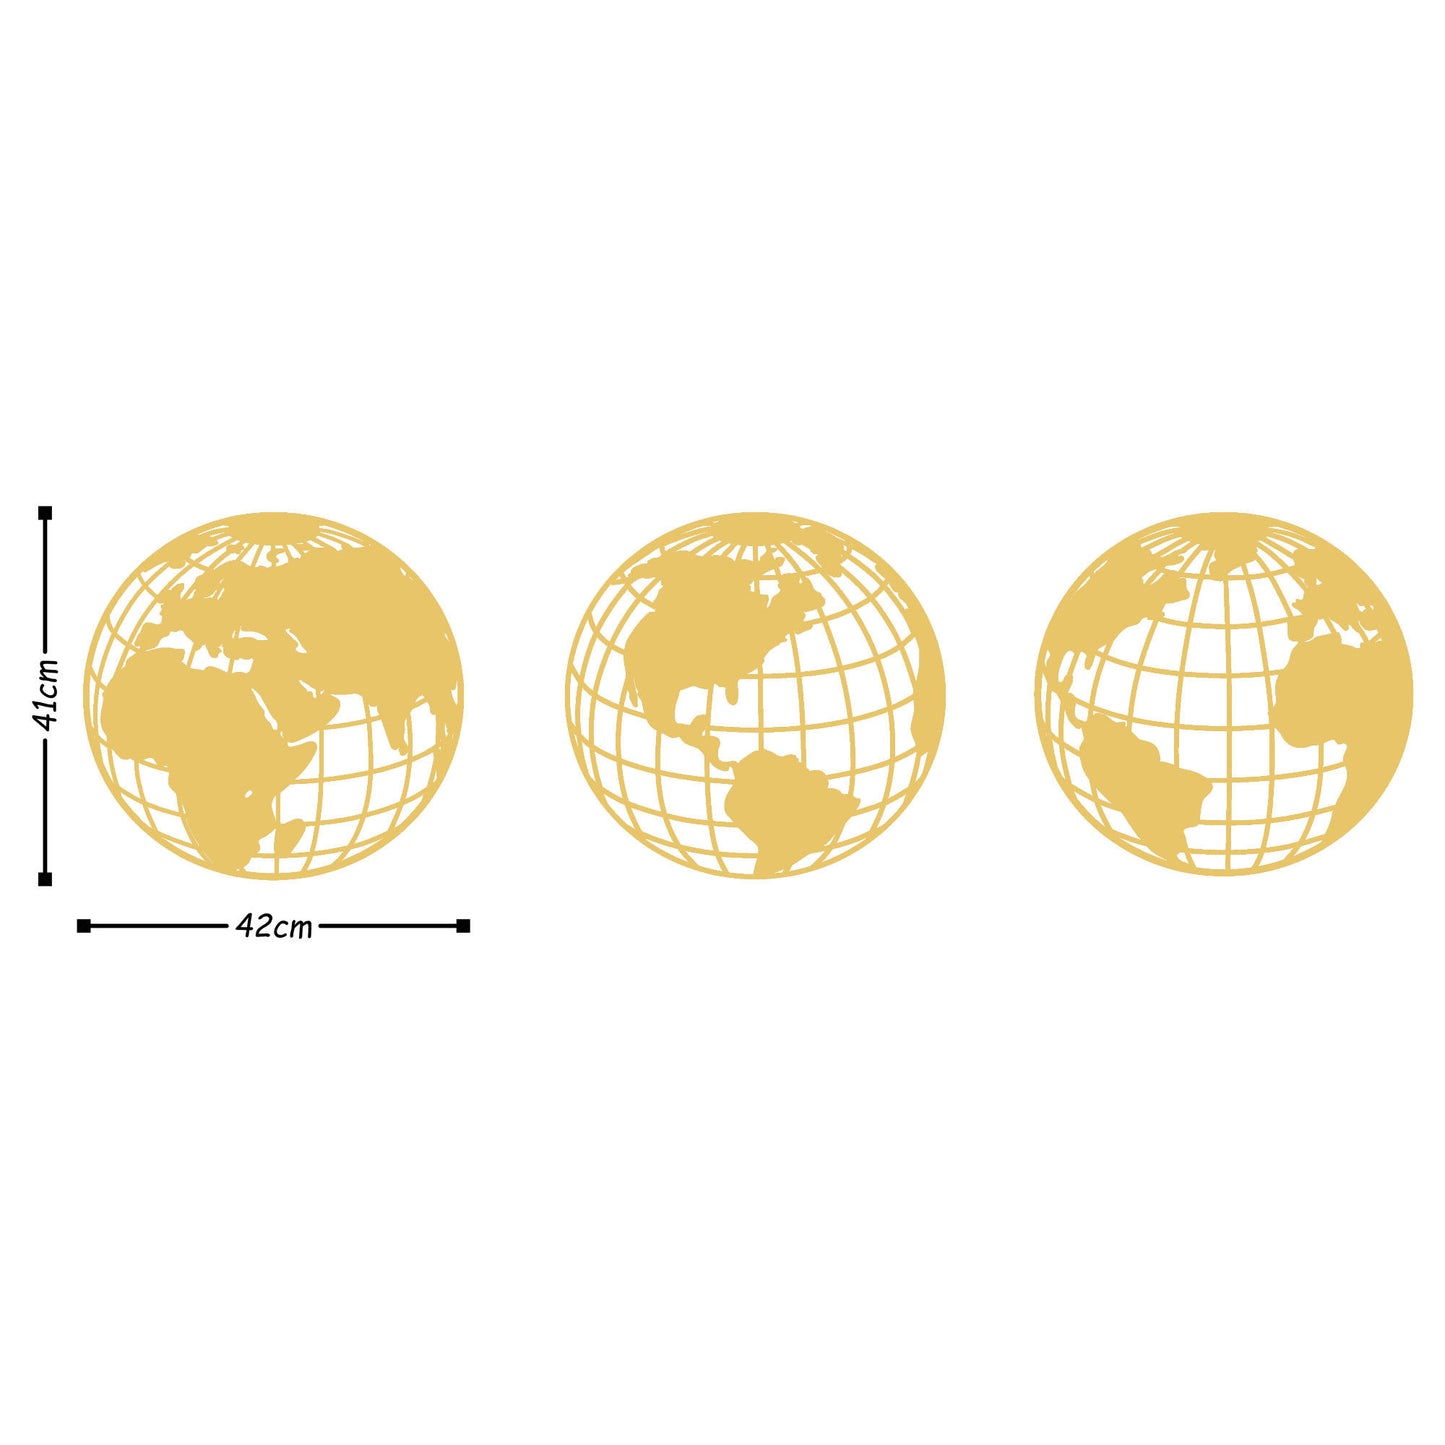 World Map Metal Decor 3 - Gold - Decorative Metal Wall Accessory